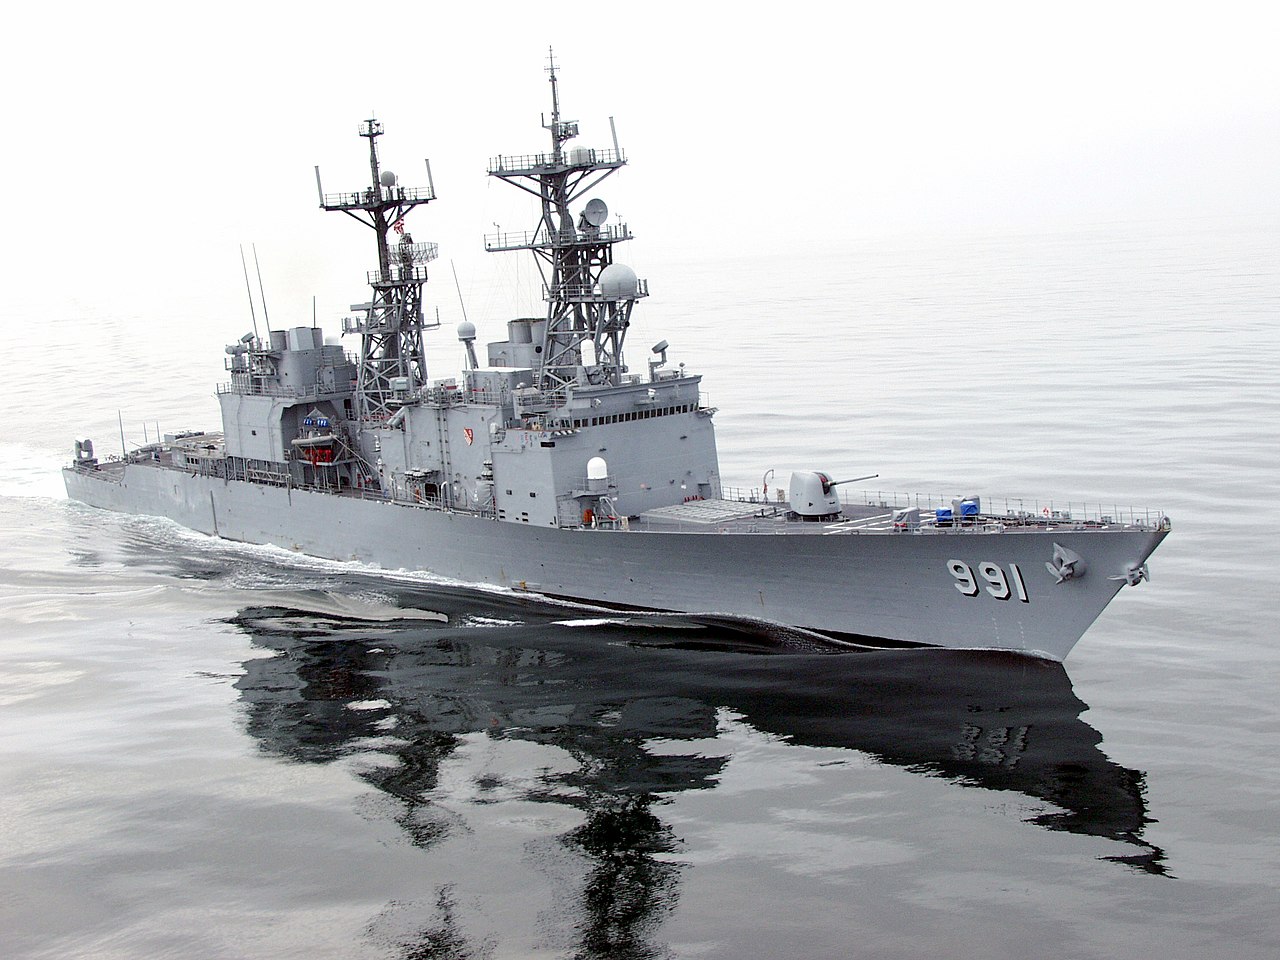 Eastern Pacific (Jun. 25, 2002) -- The U.S. Navy destroyer USS Fife (DD 991)